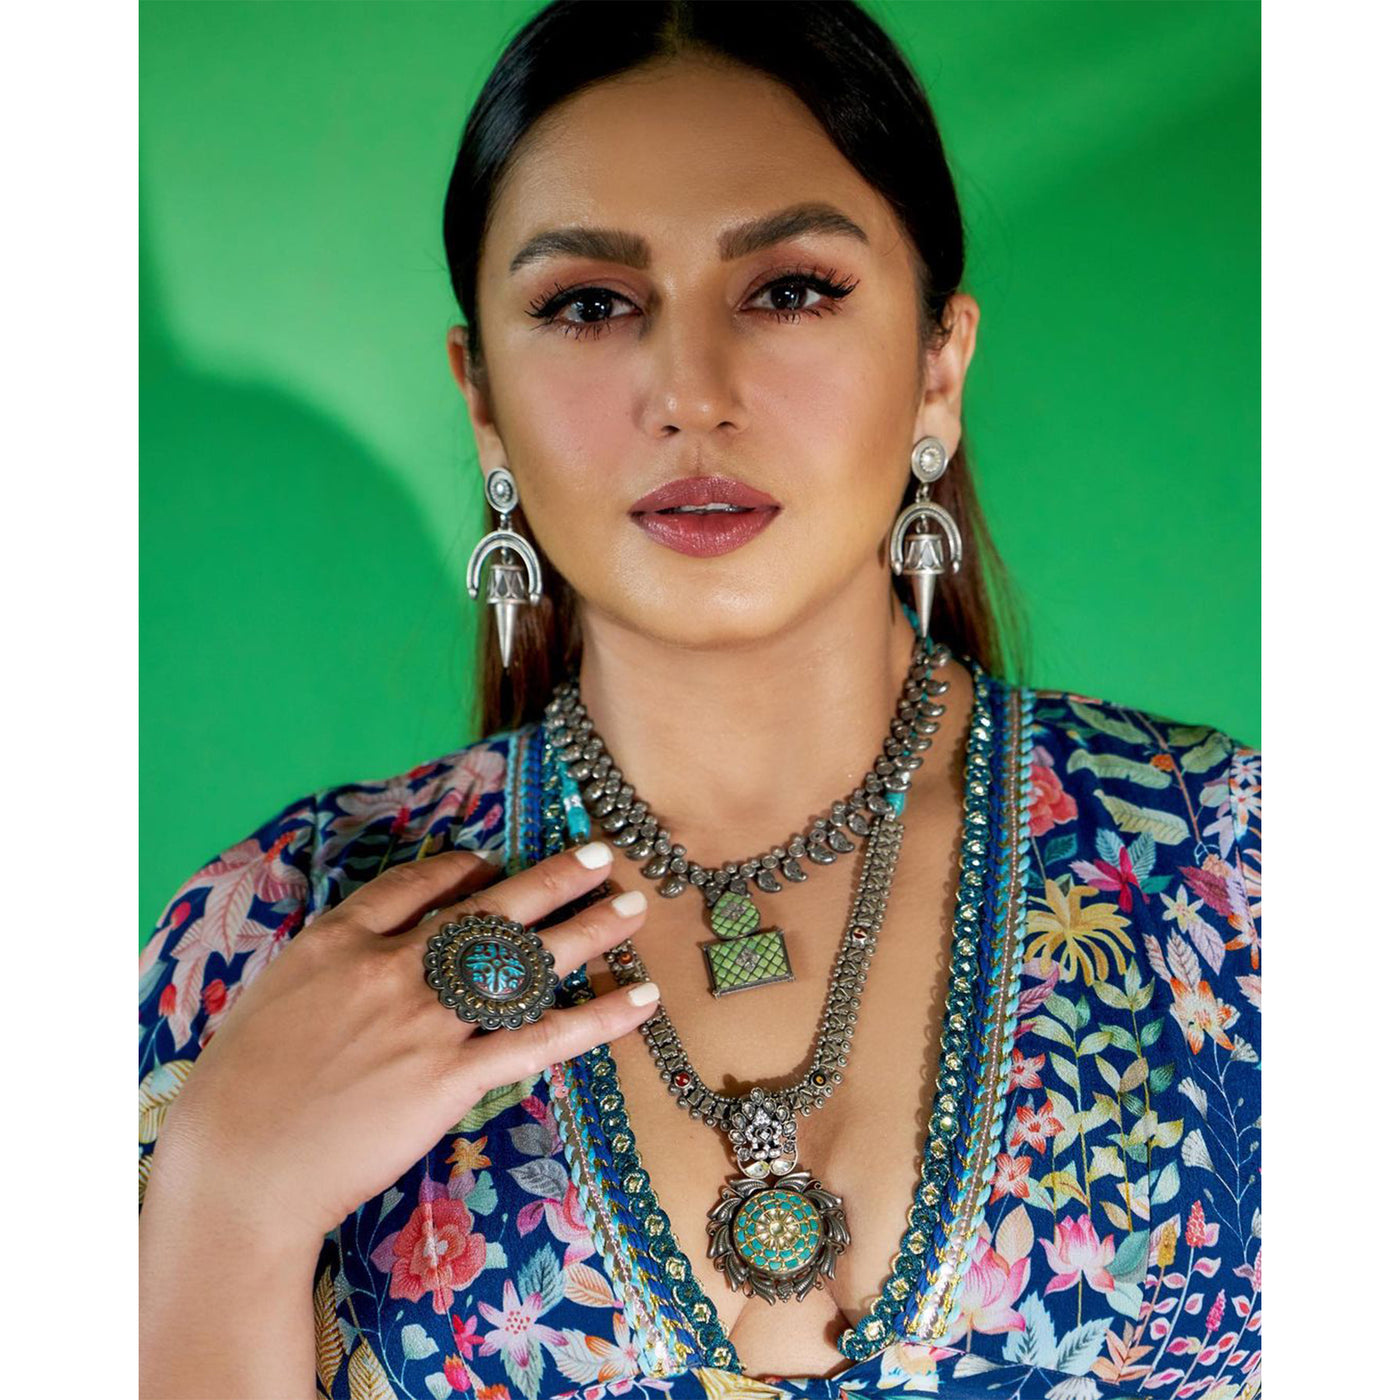 Huma Qureshi In Sangeeta Boochra Jewellery